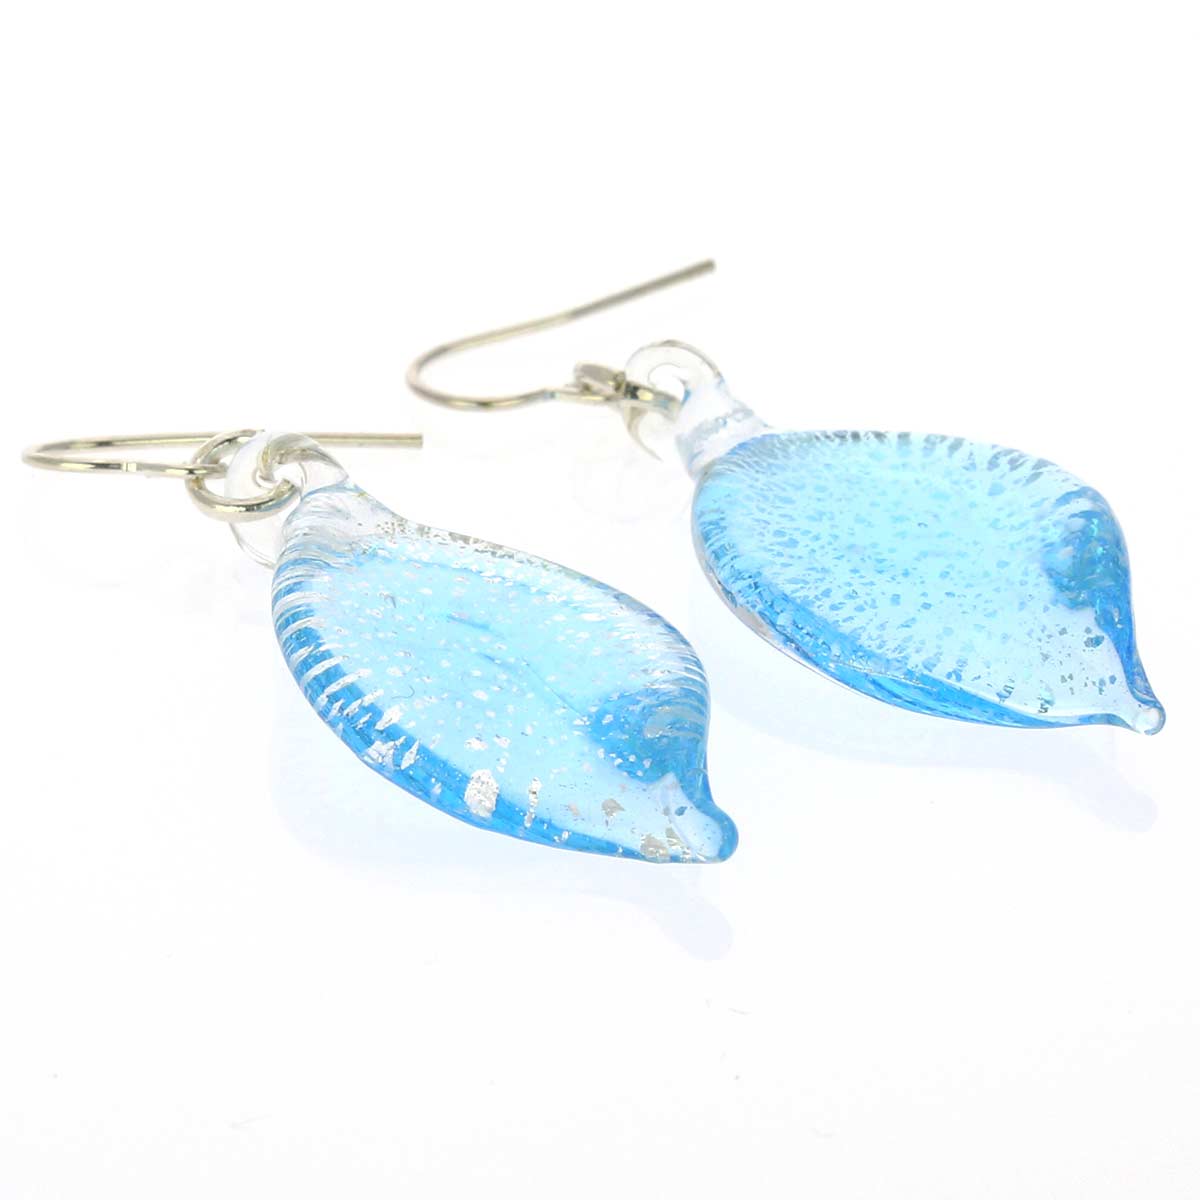 Silver Rain Murano Leaf Earrings - Aqua